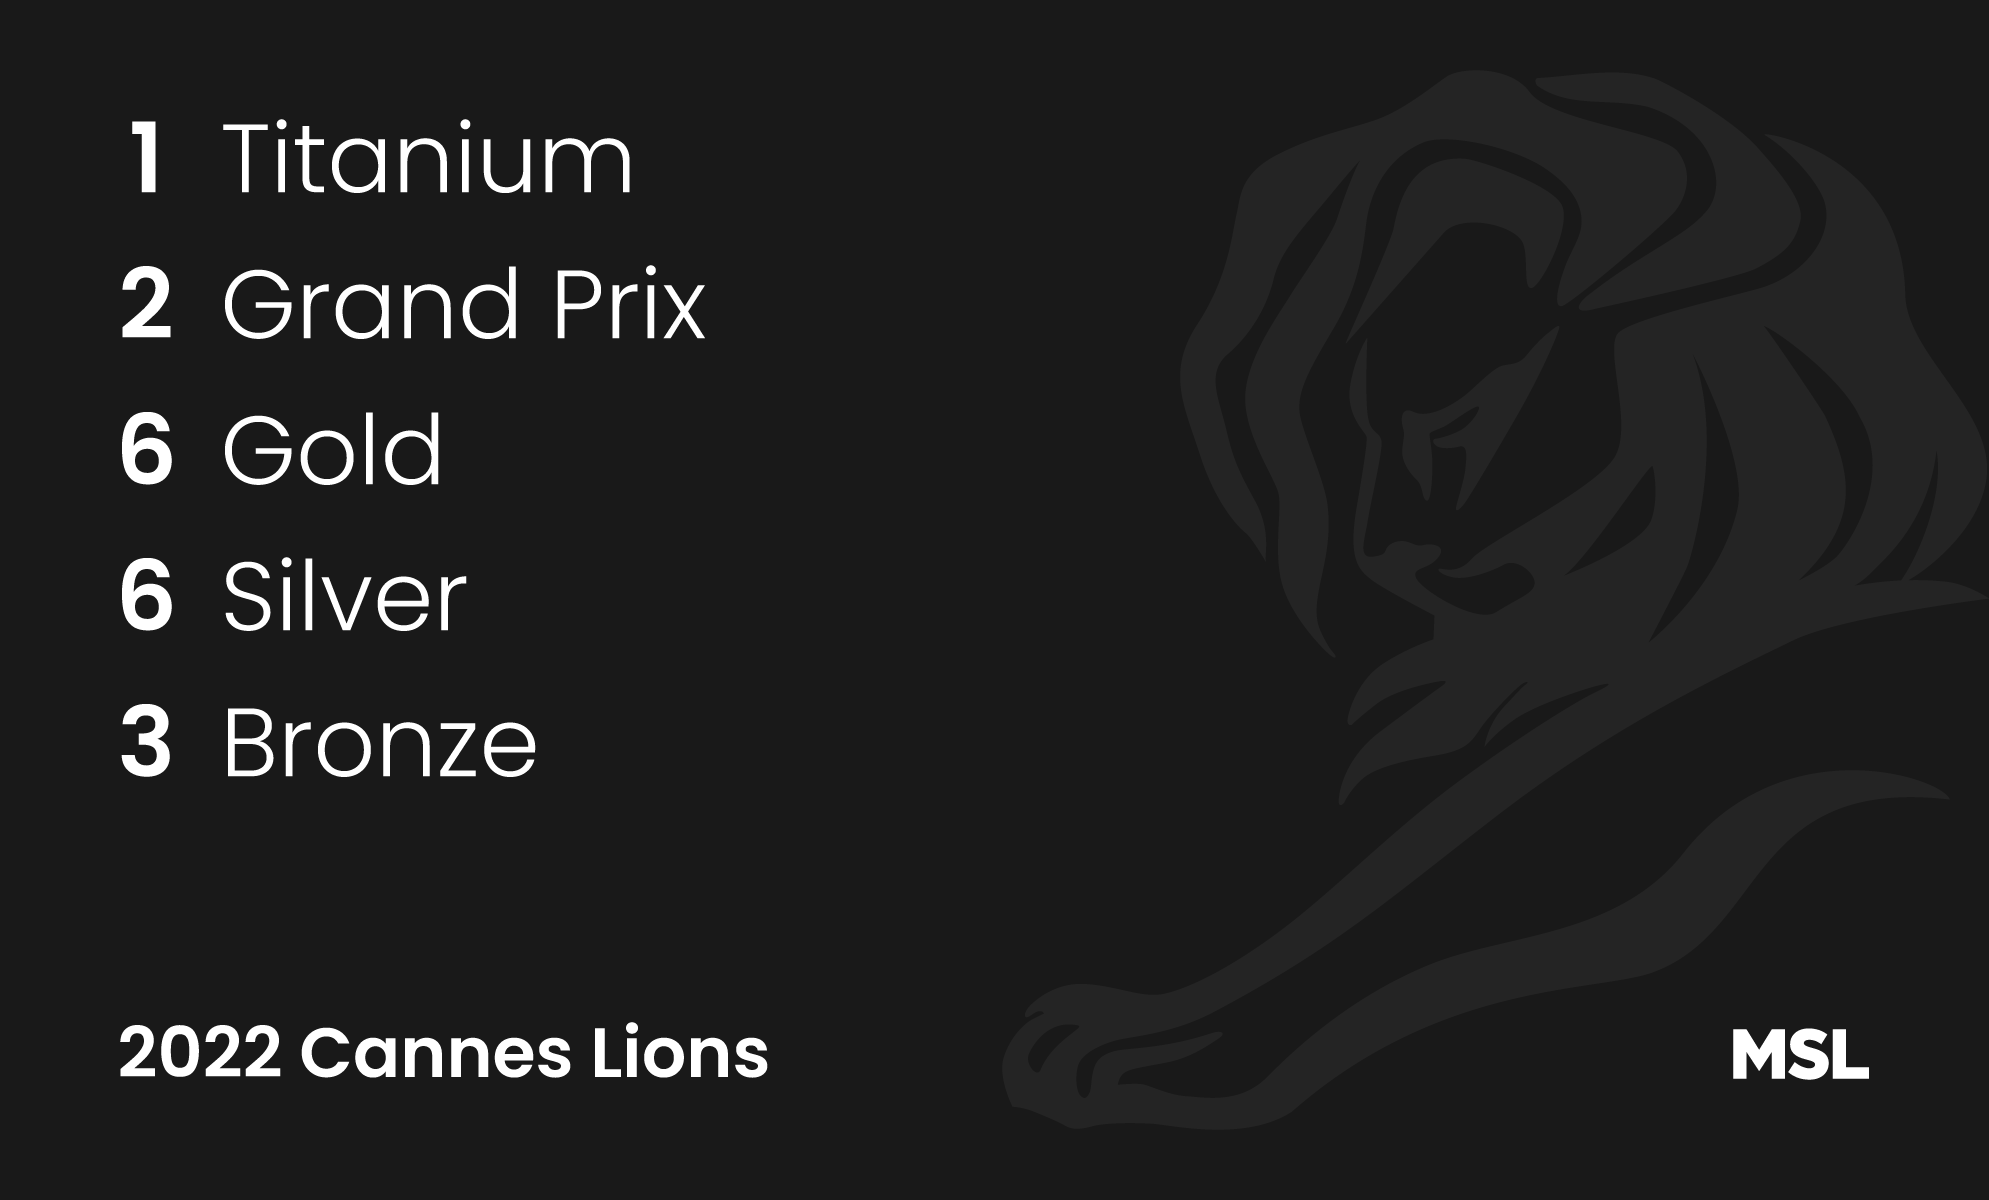 1 titanium, 2 grand prix, 6 gold, 6 silver, 3 bronze, 2022 cannes lions